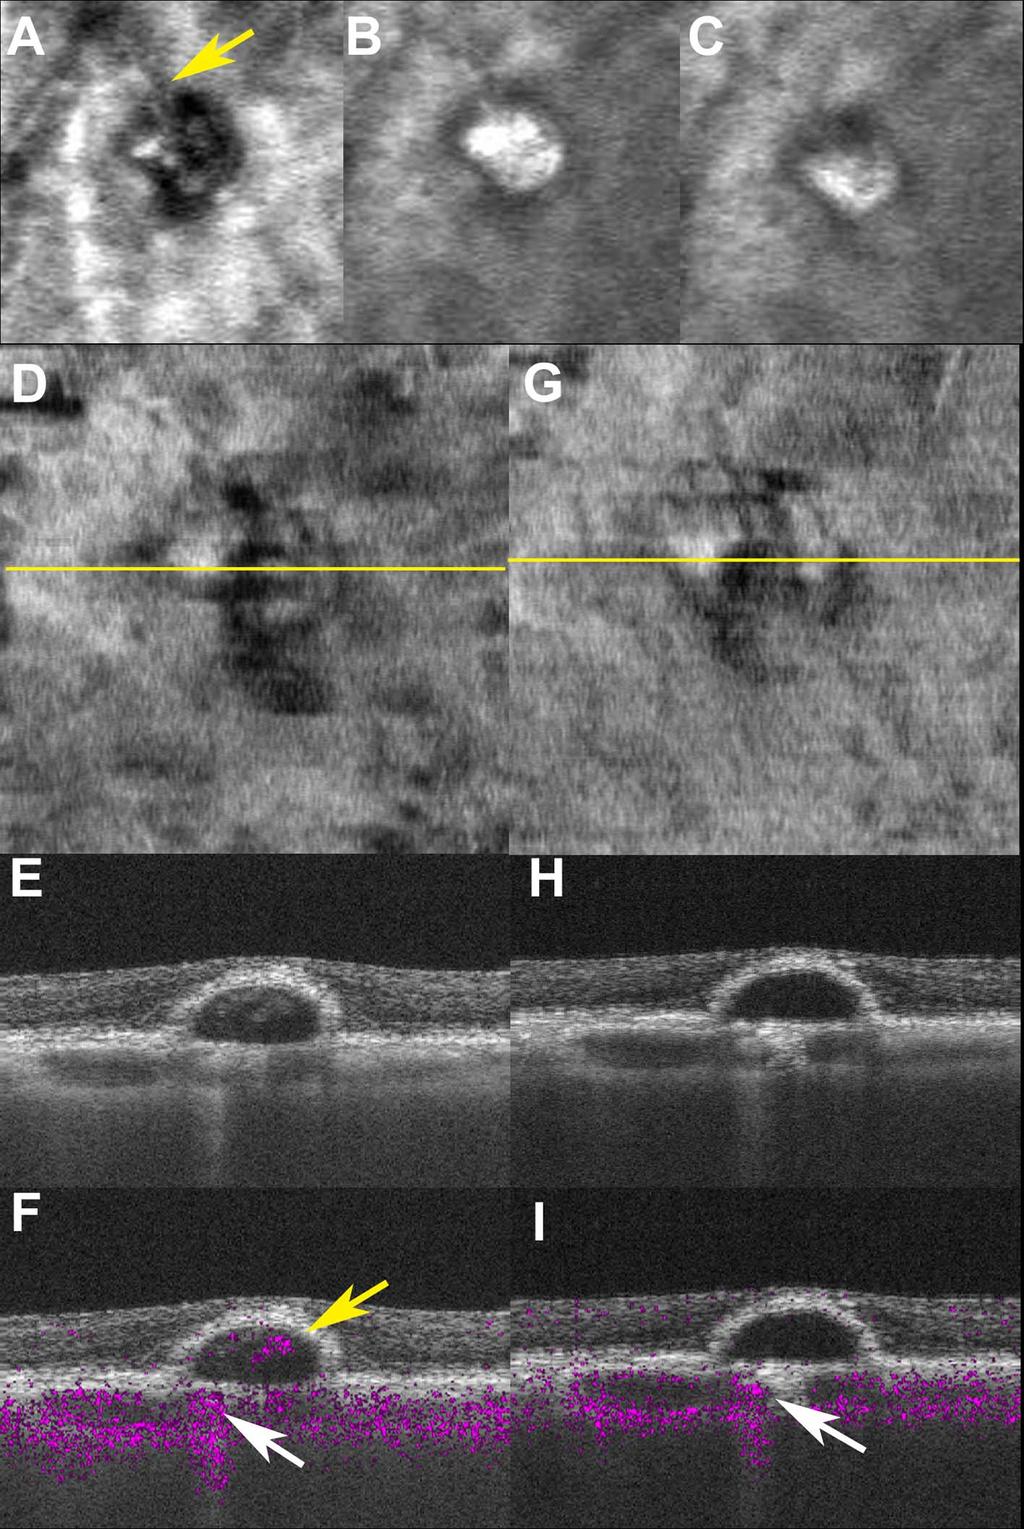 Noninvasive Vascular Imaging of PCV by Doppler OCT IOVS j May 2015 j Vol. 56 j No. 5 j 3184 FIGURE 5.